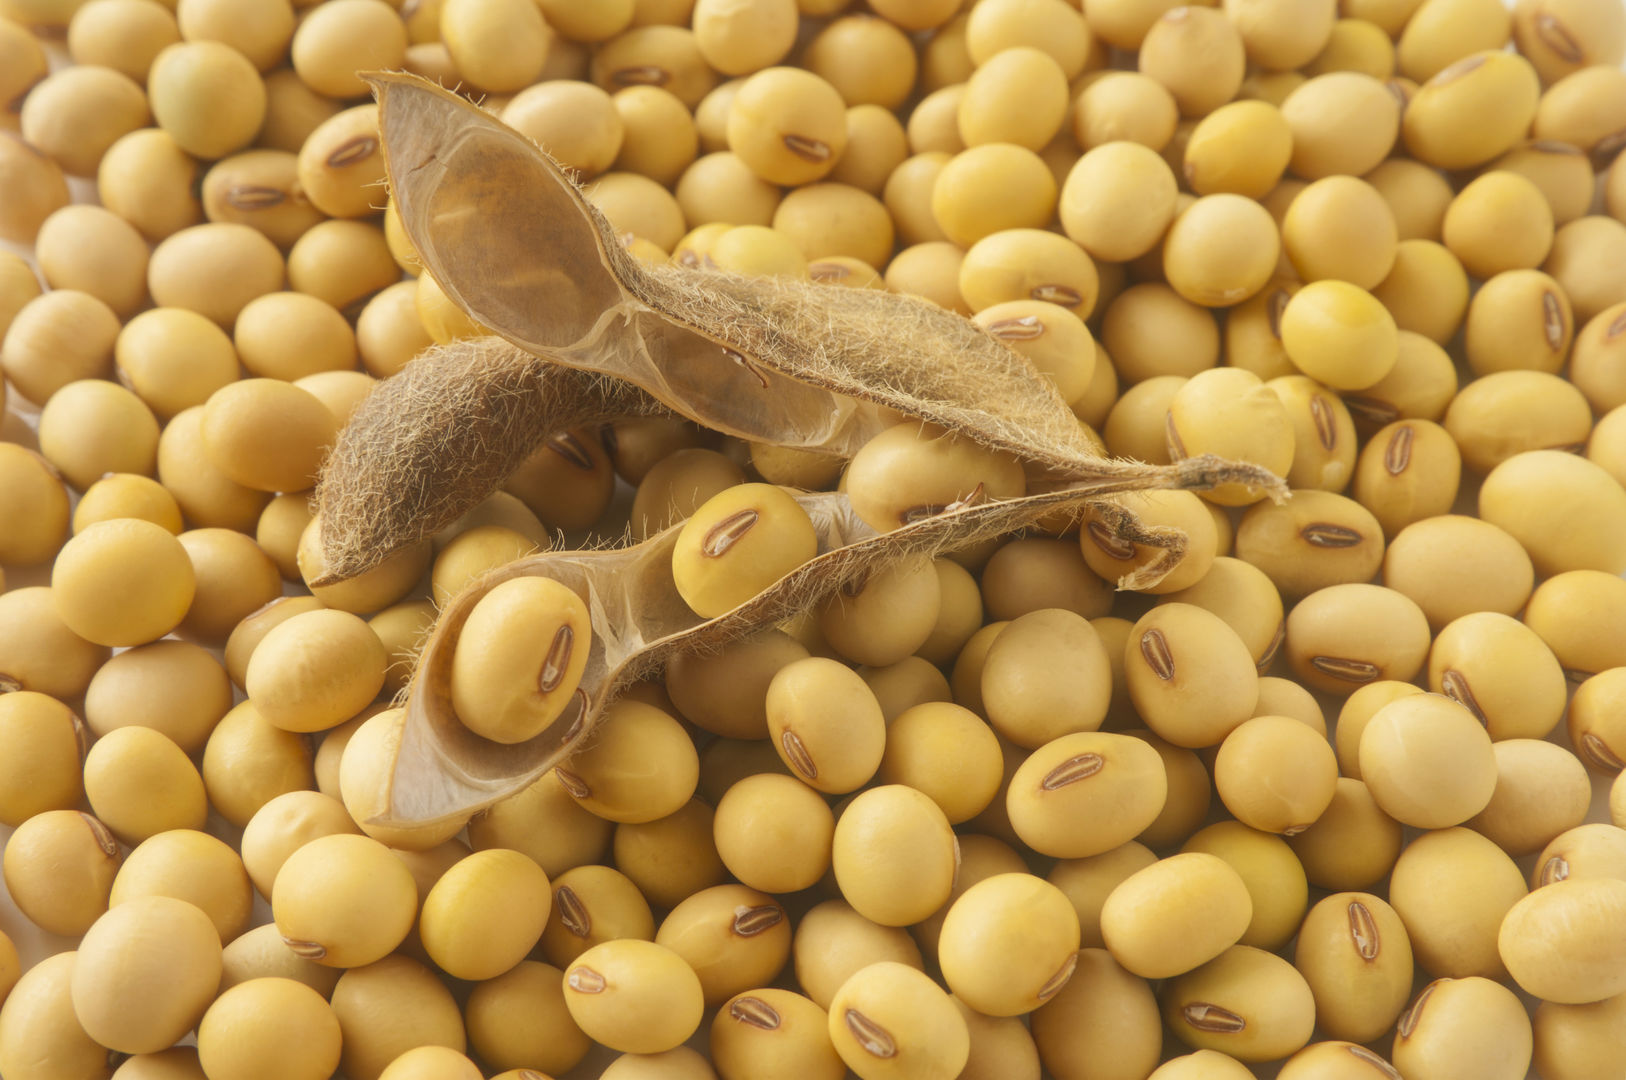 Soja Paul plantaardige eiwitbron - health food-soybean via Shutterstock